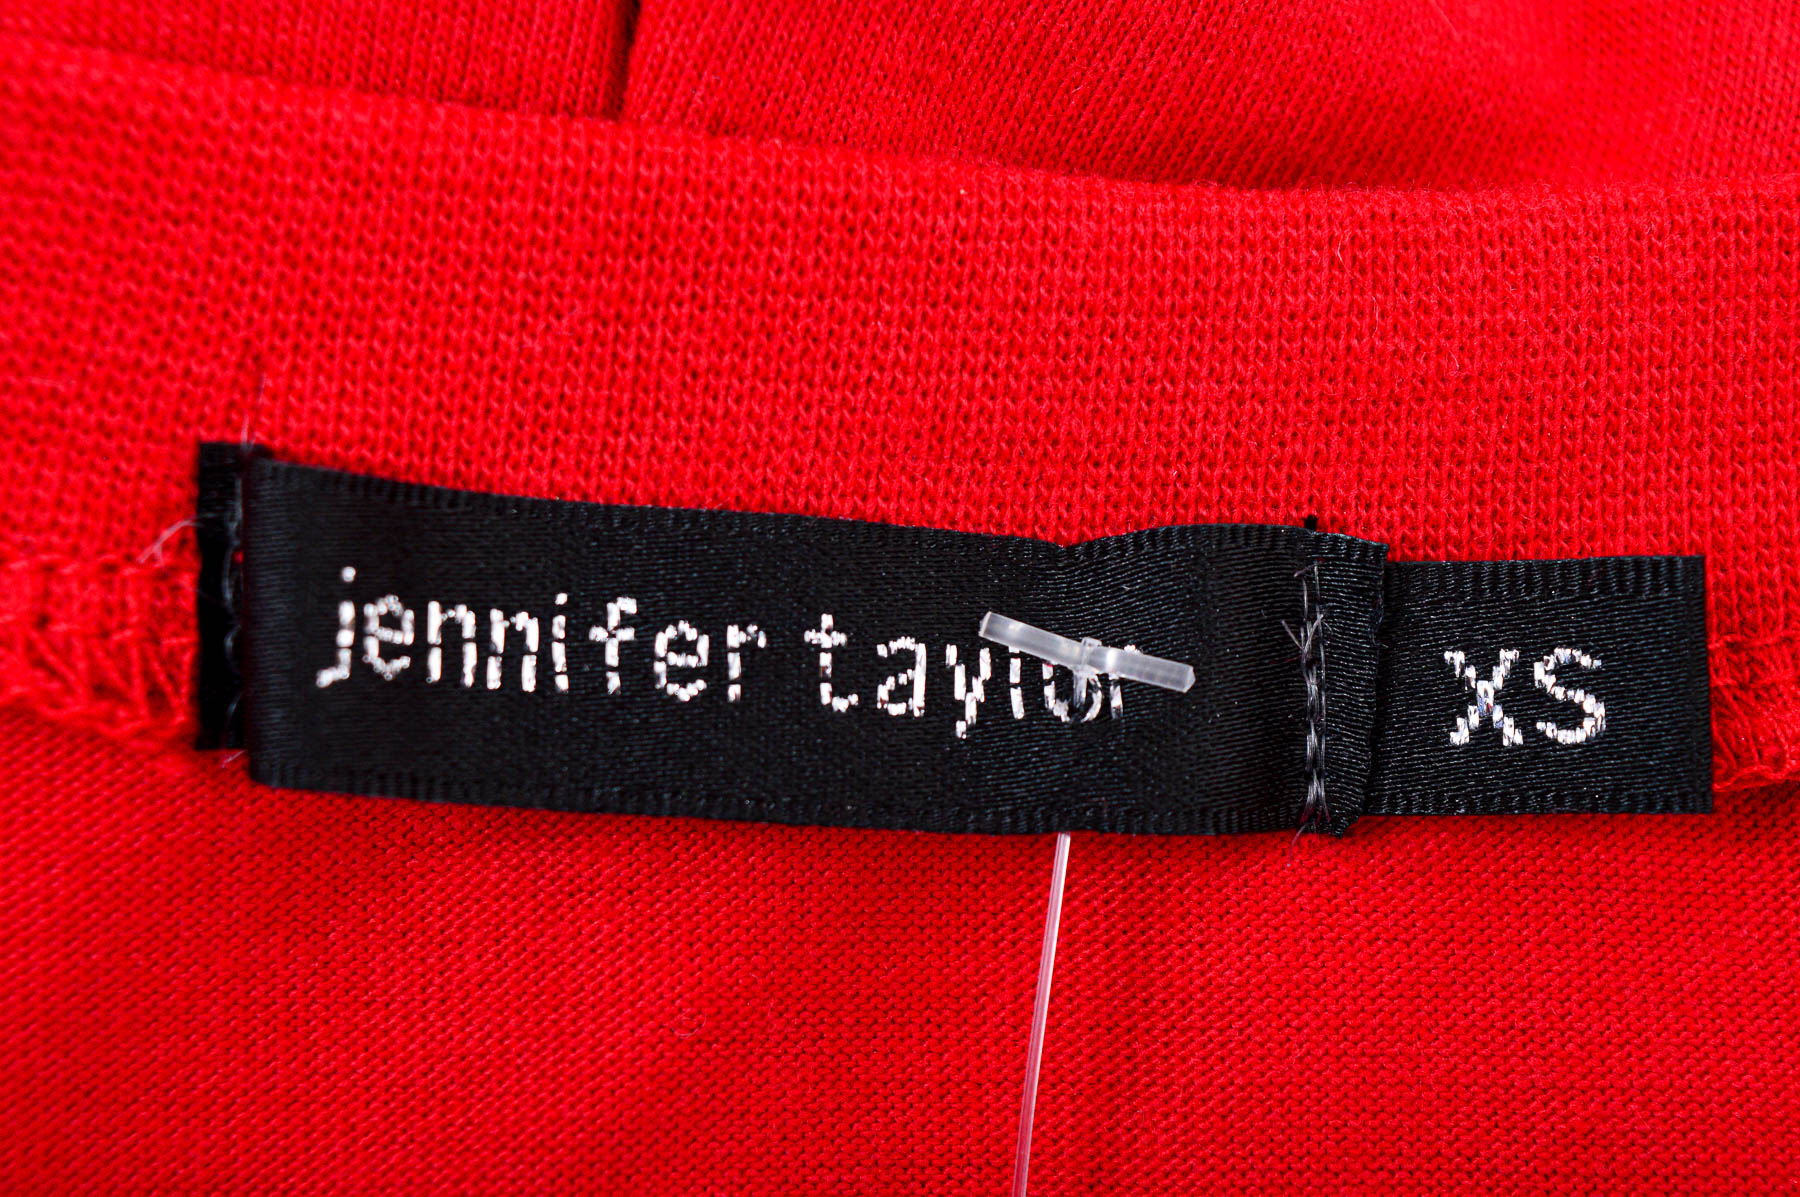 Dress - Jenifer Taylor - 2